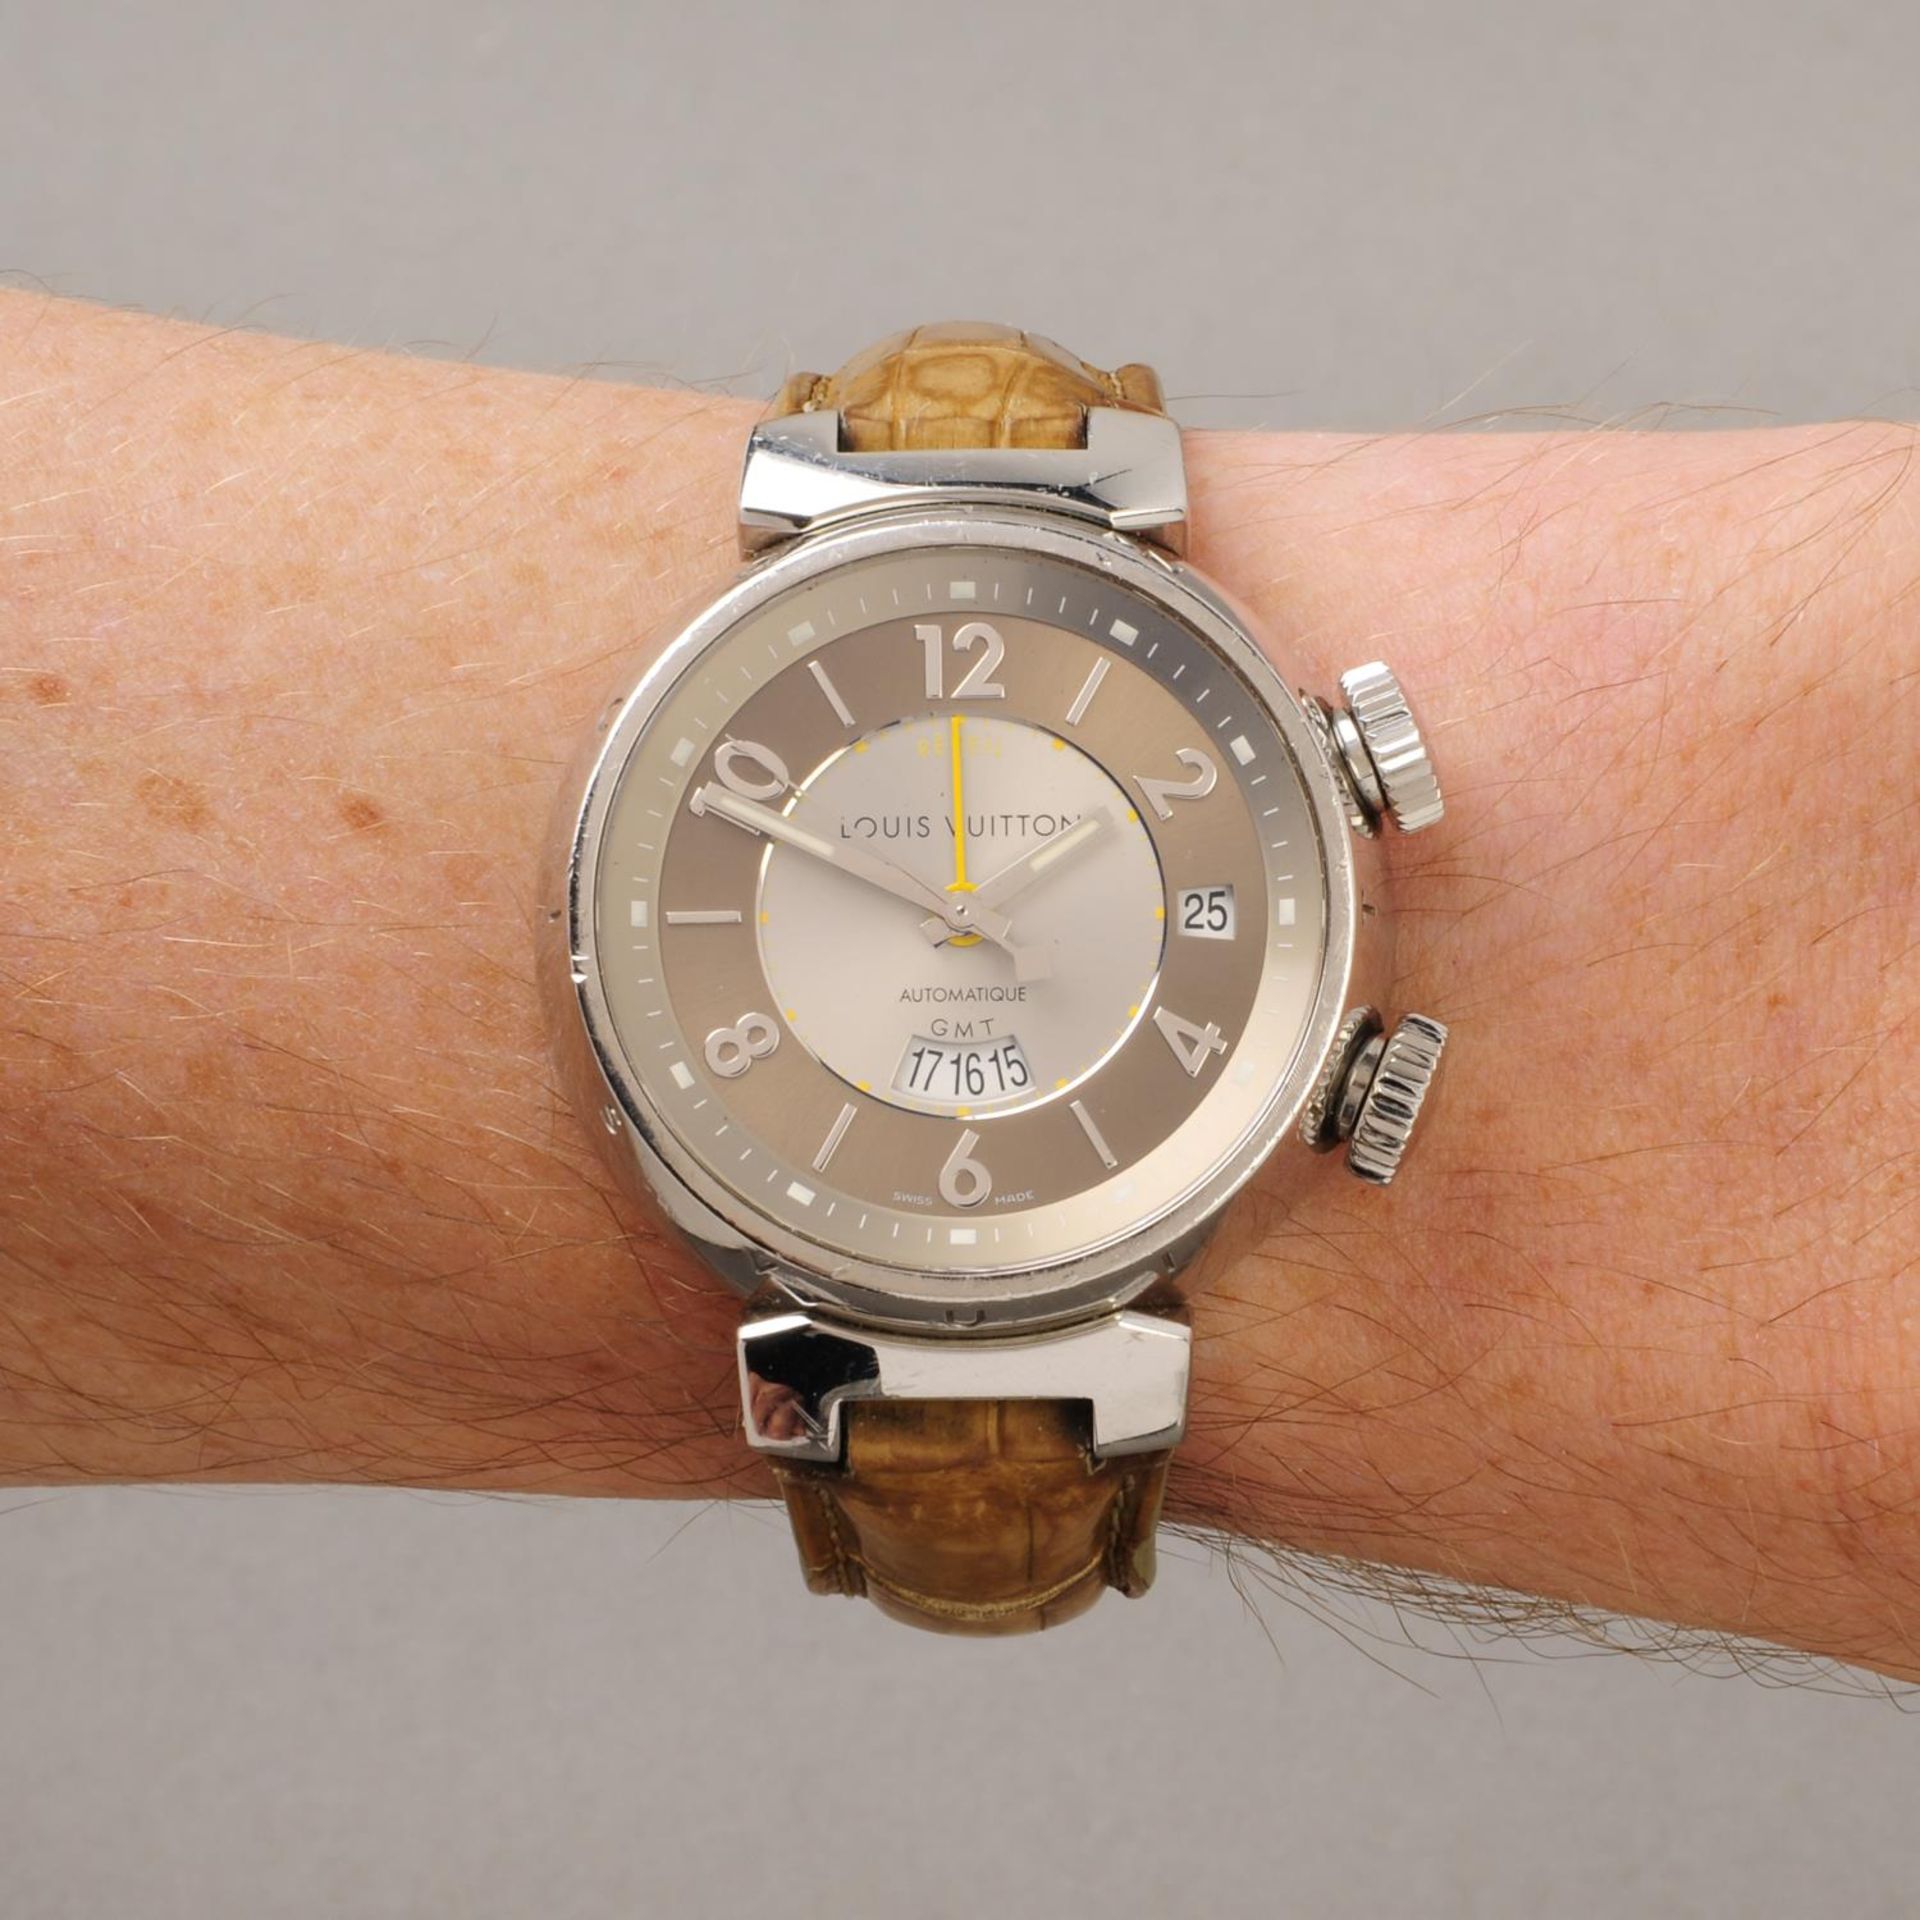 LOUIS VUITTON - a gentleman's Tambour GMT wrist watch. - Image 3 of 6